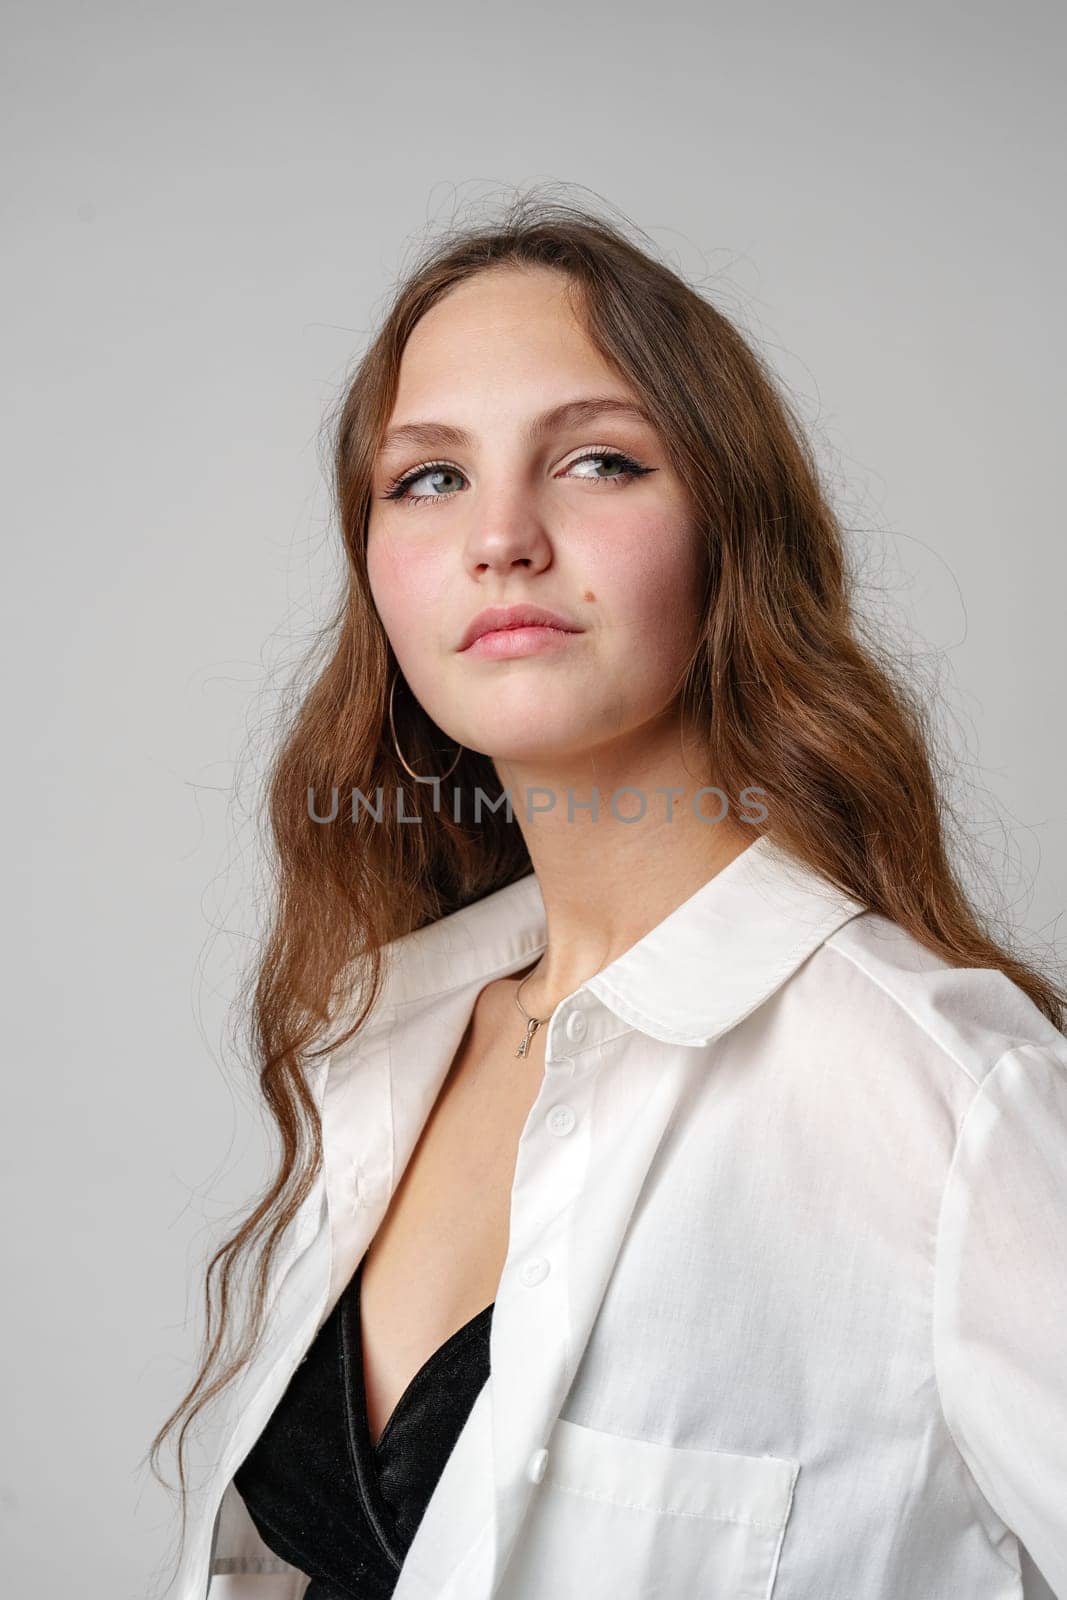 Woman With Long Hair Wearing White Shirt by Fabrikasimf